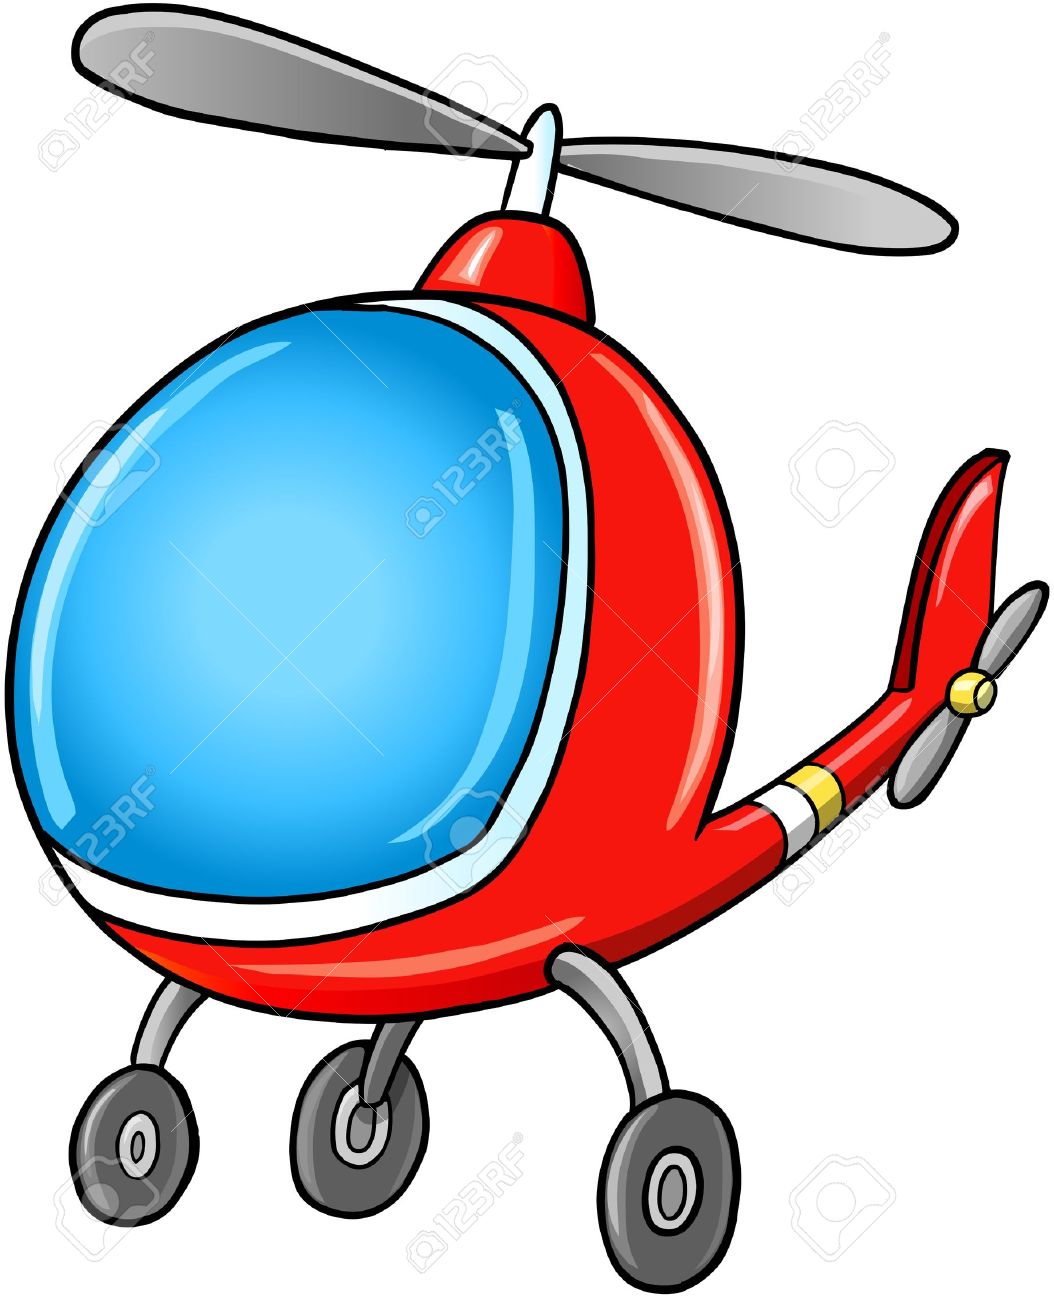 13373916-Cute-Doodle-Cartoon-Helicopter-Vector-Illustration-Stock-Vector.jpg